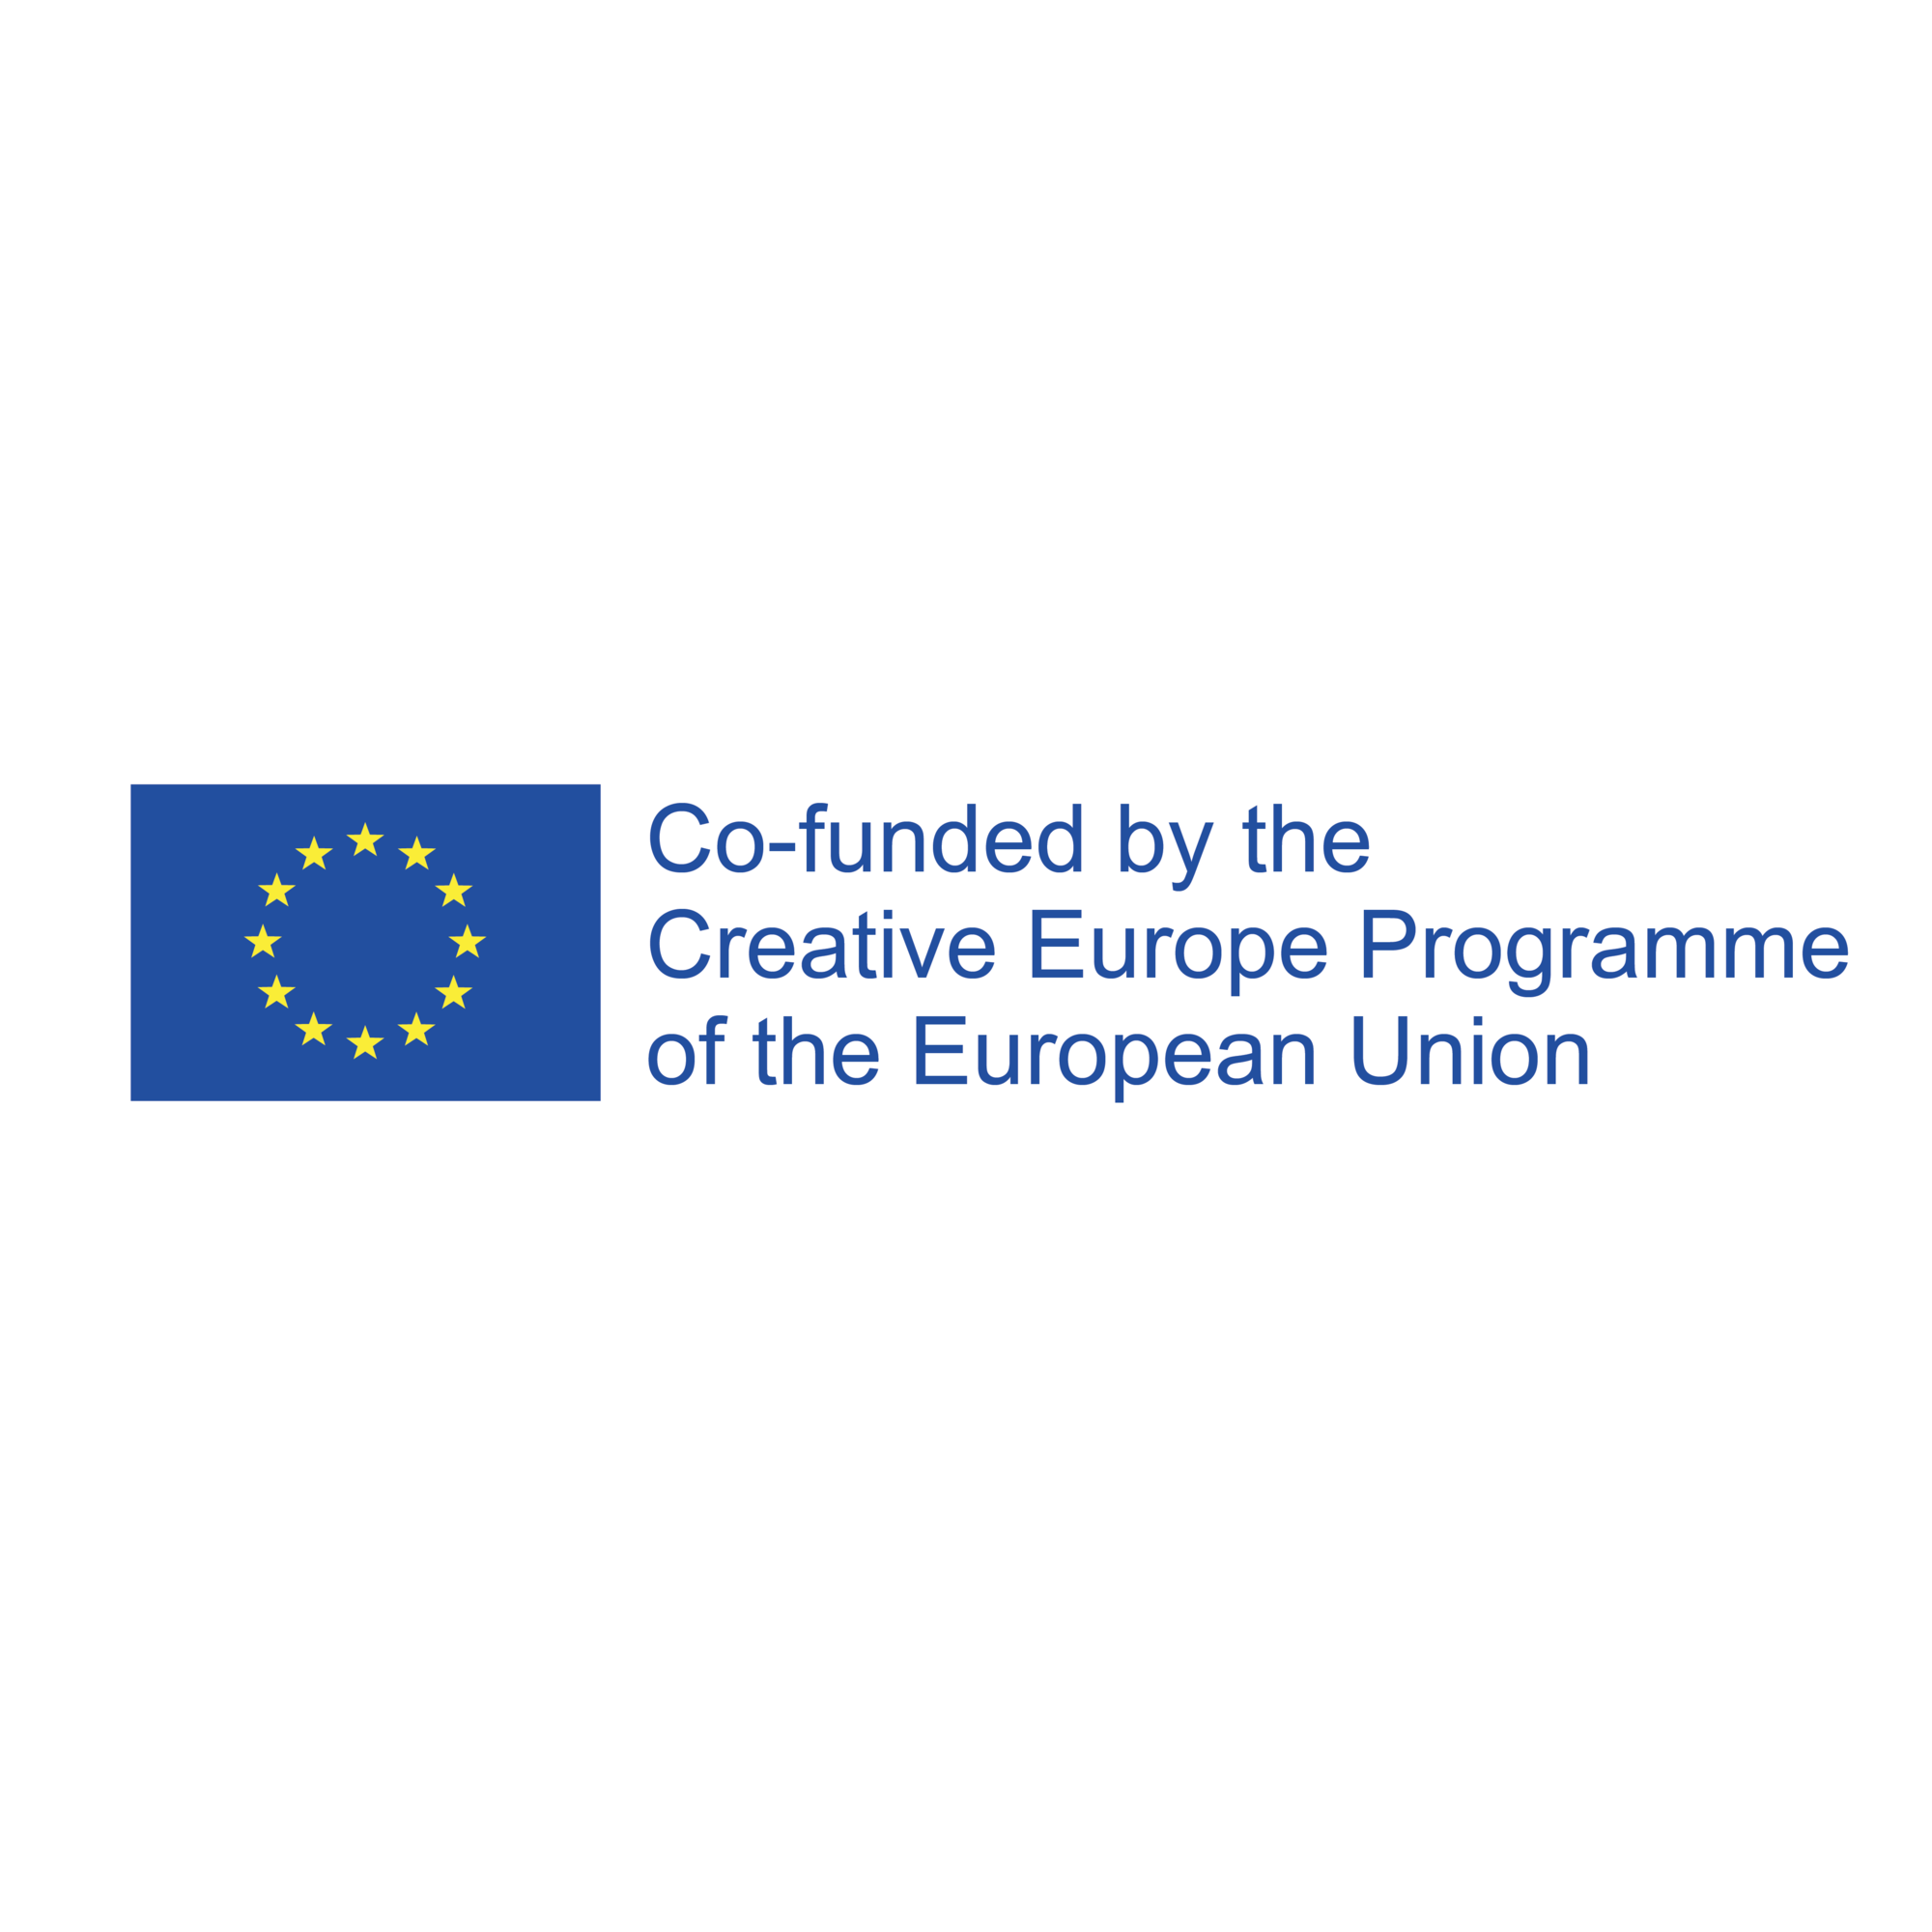 Creative Europe Programme of the European Union